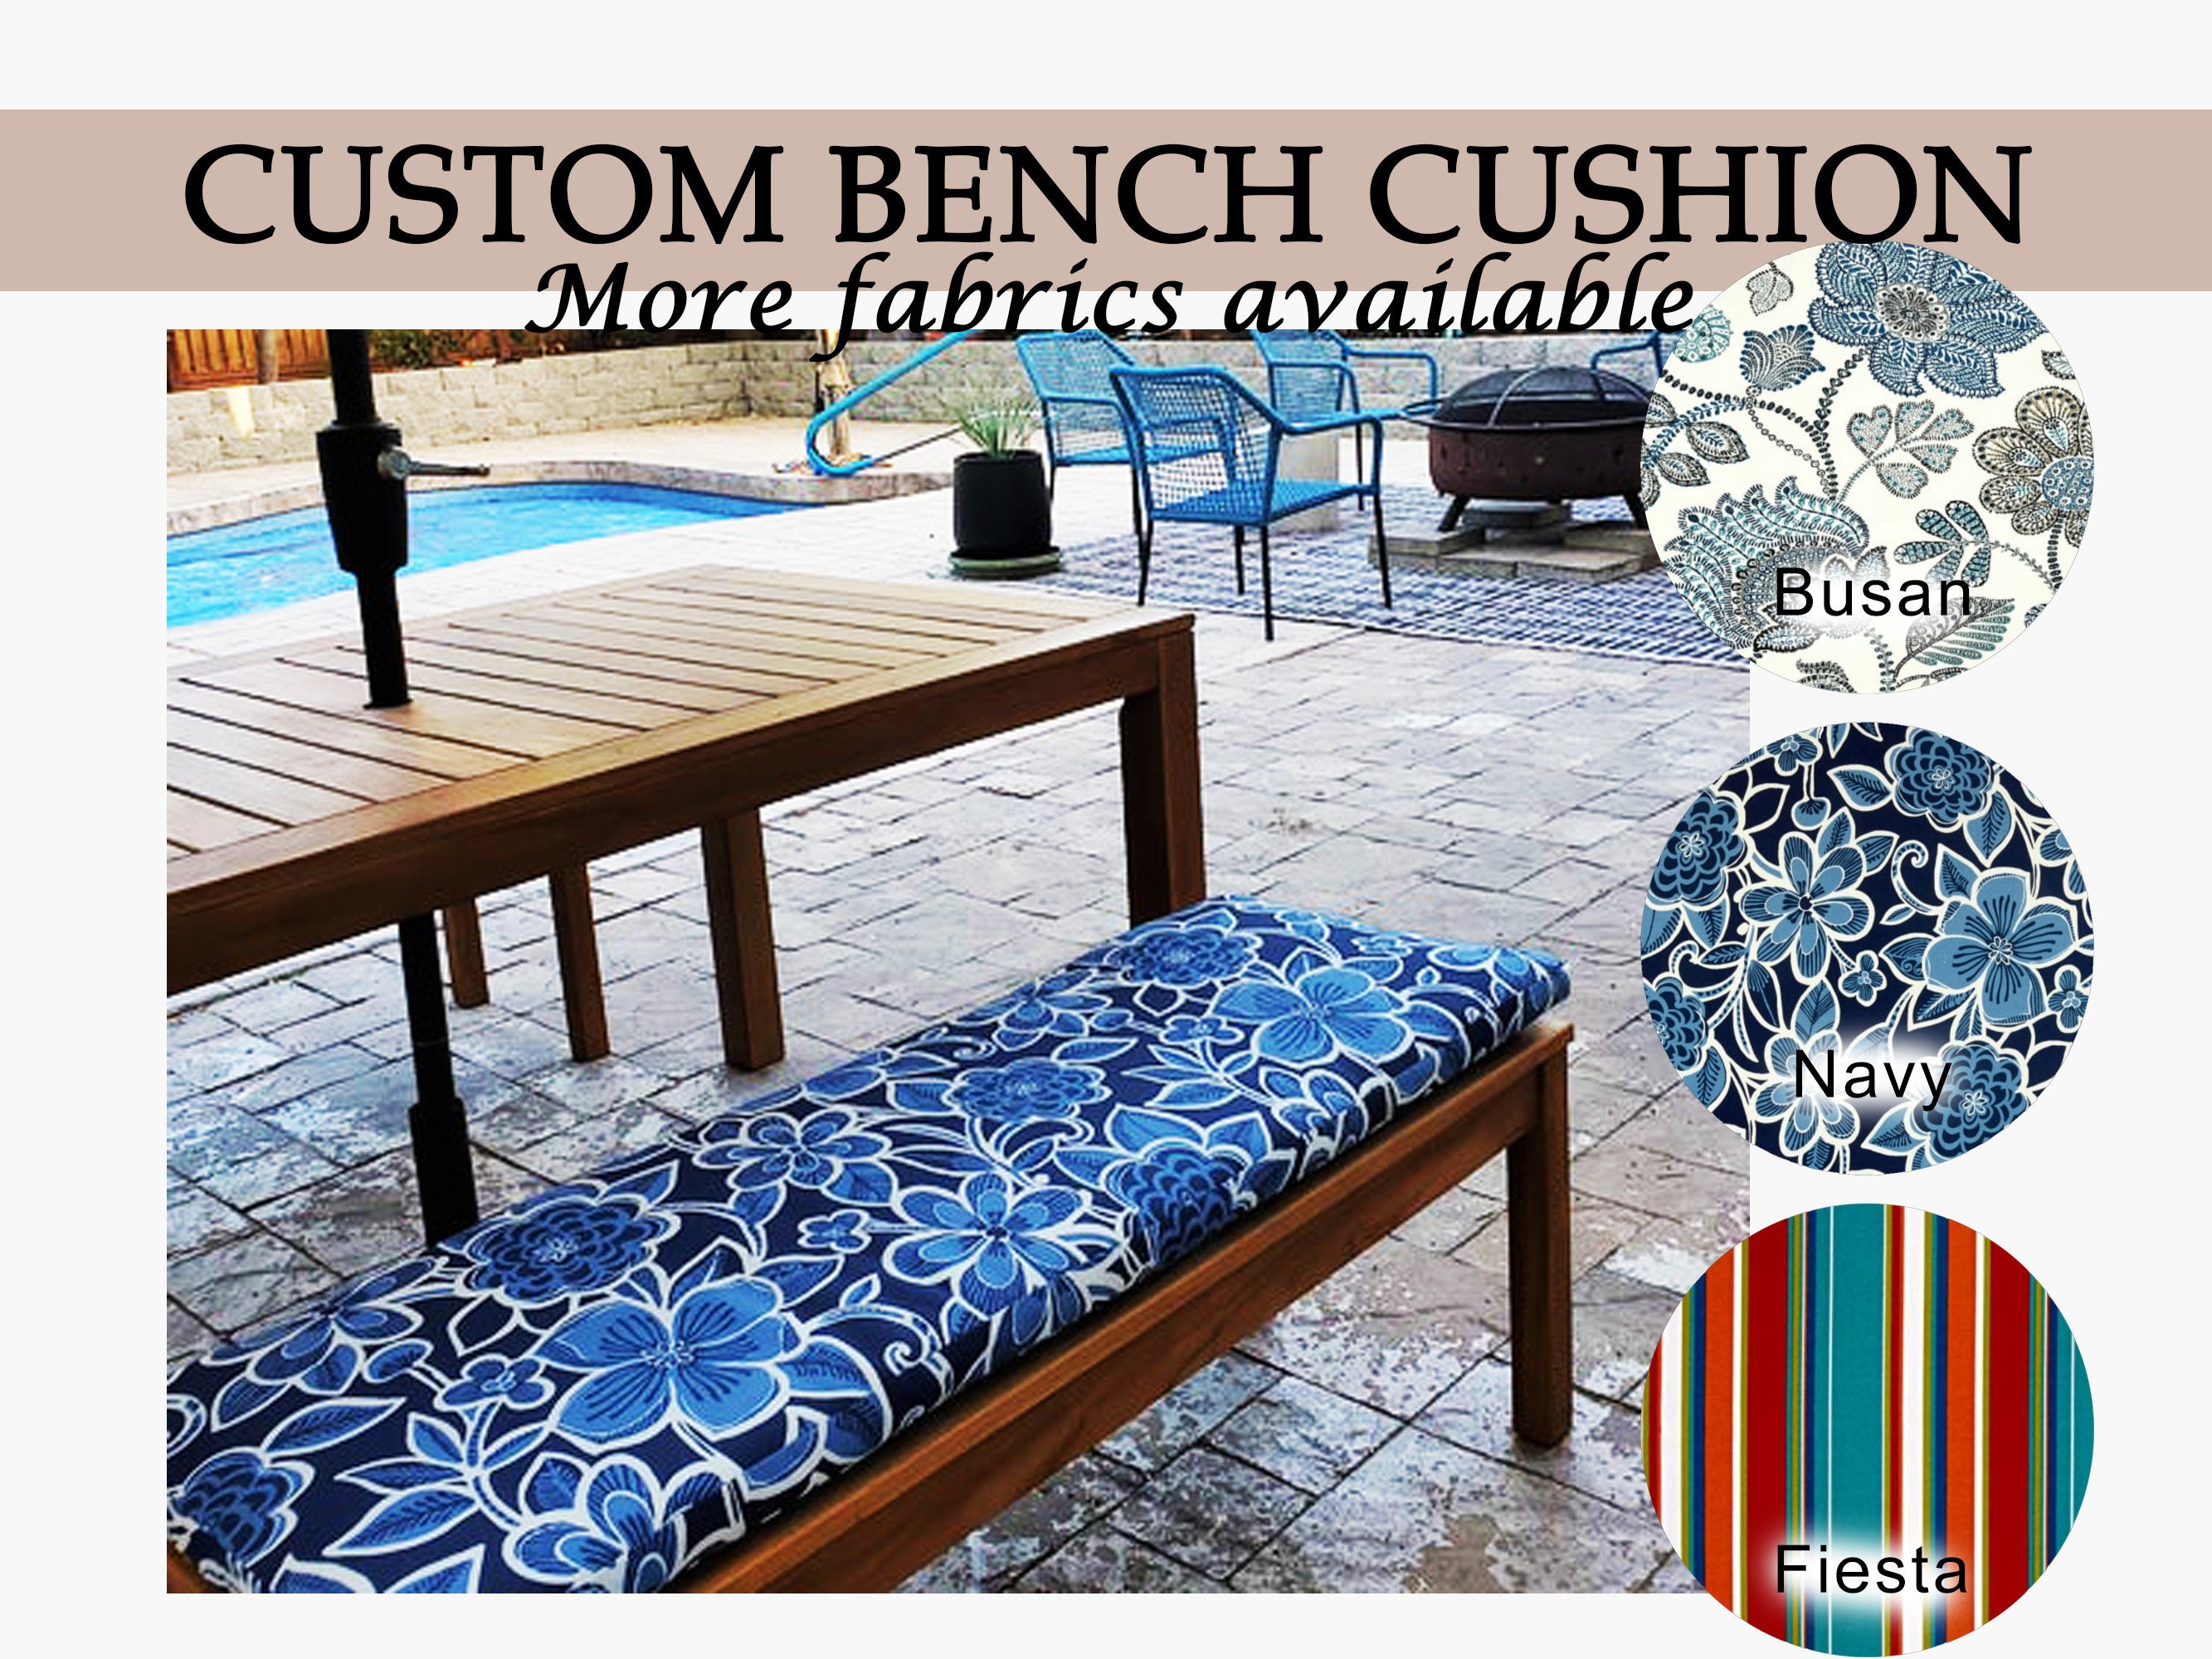 Exterior Boat Deck Cushions - Custom Made - Waterproof